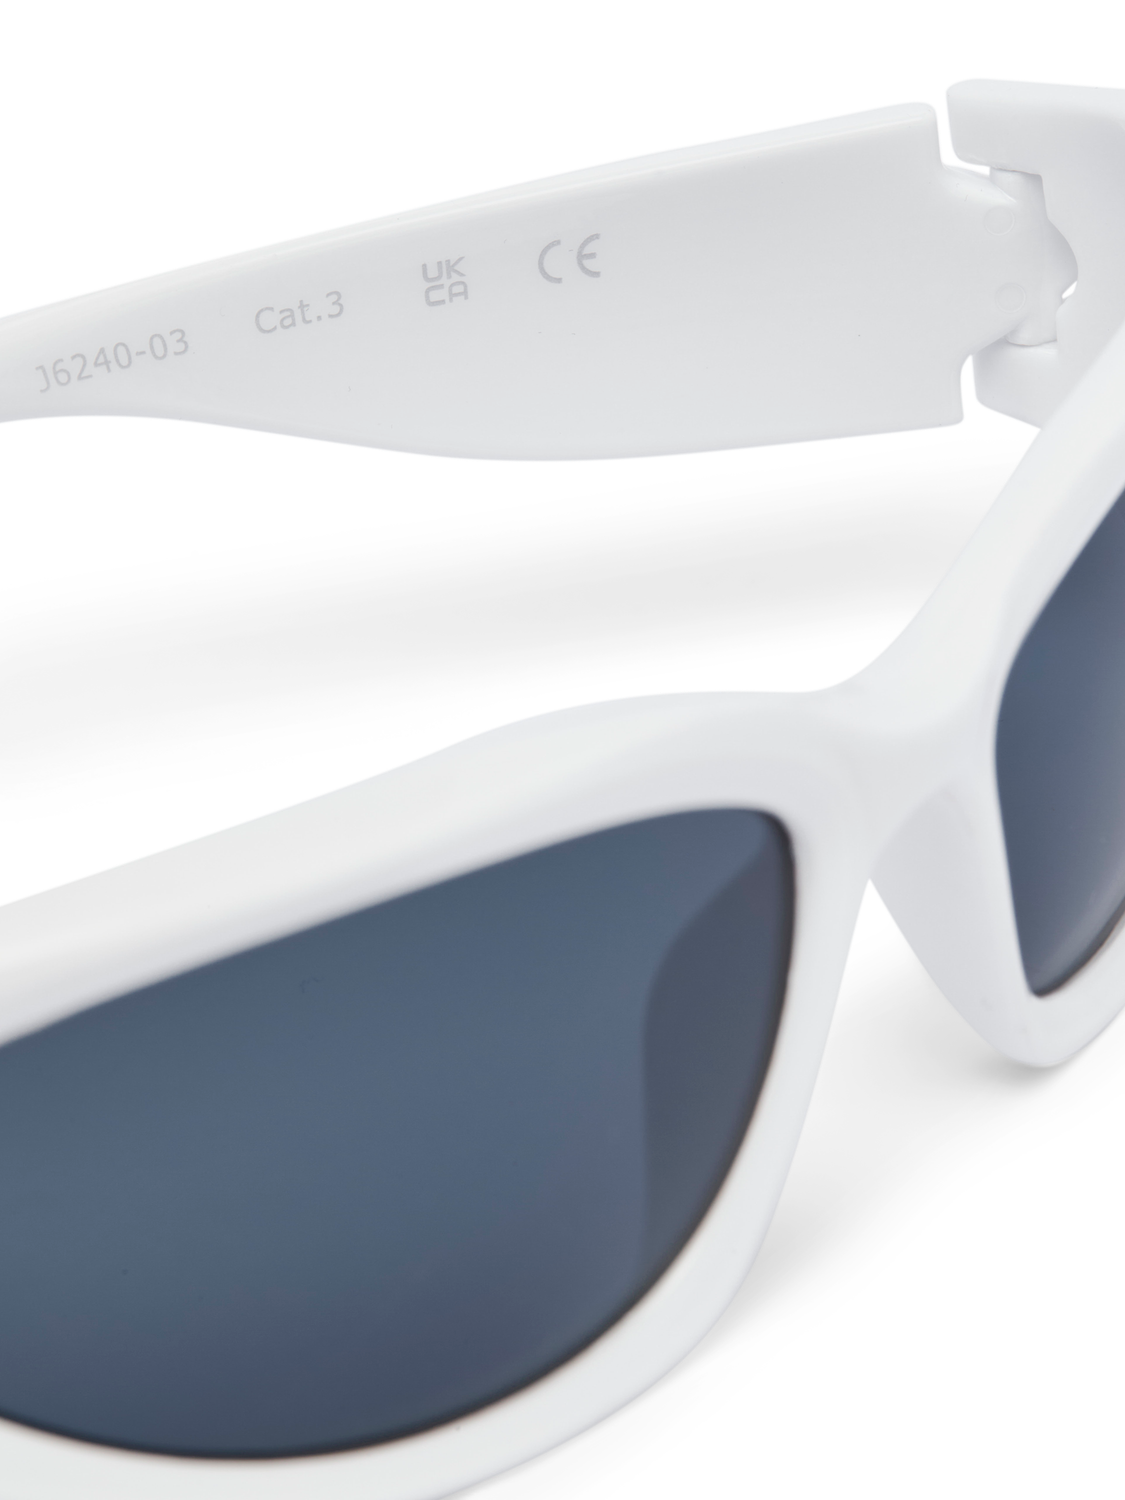 Jack & Jones Plastic Rectangular sunglasses -White - 12251497